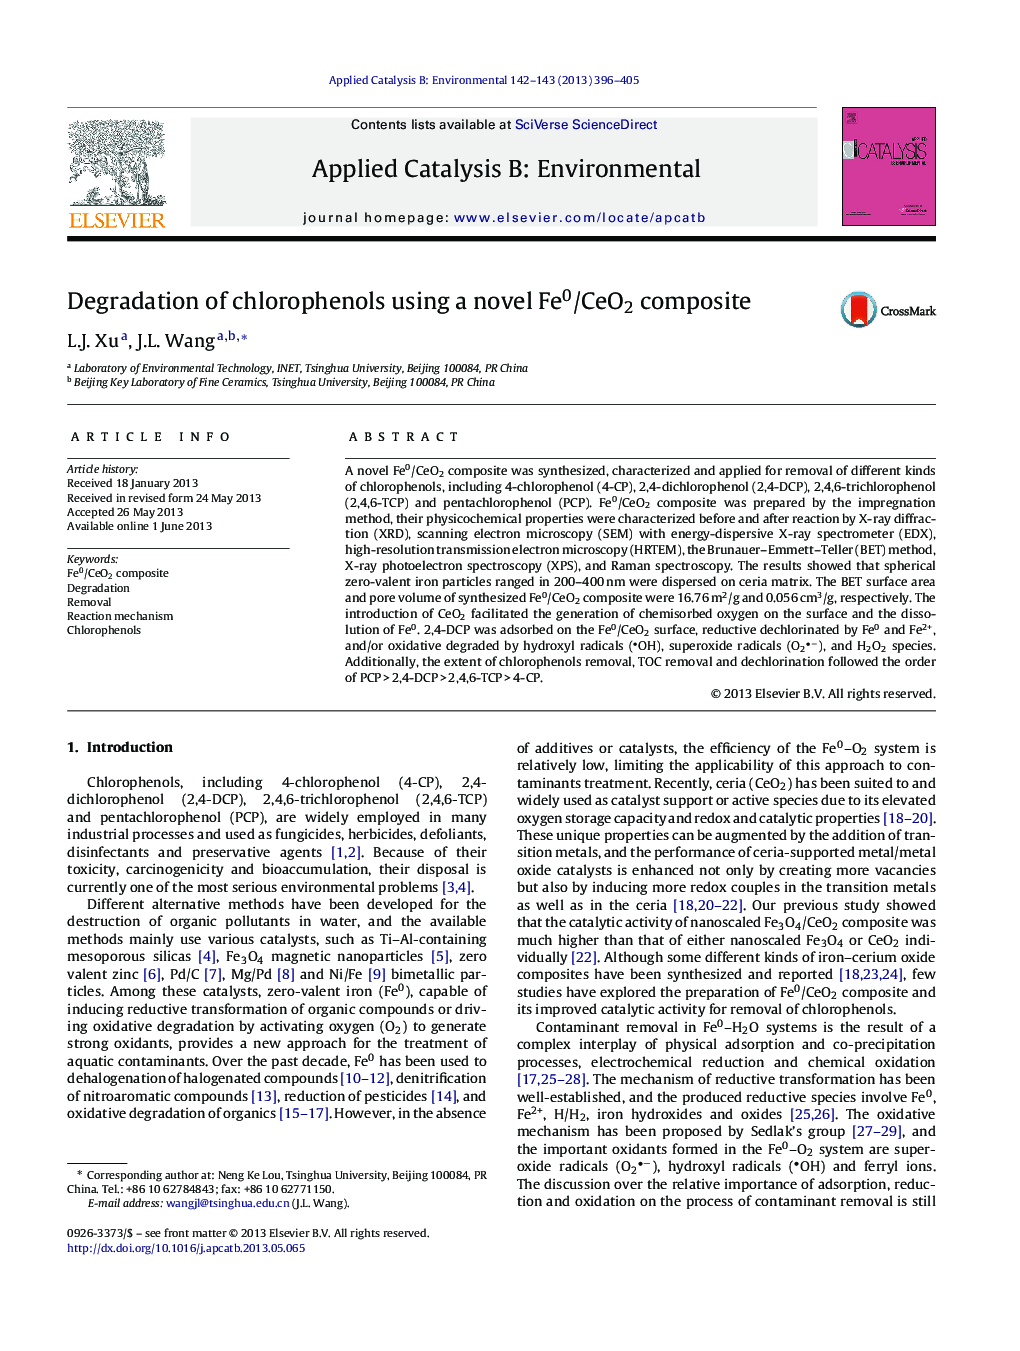 Degradation of chlorophenols using a novel Fe0/CeO2 composite